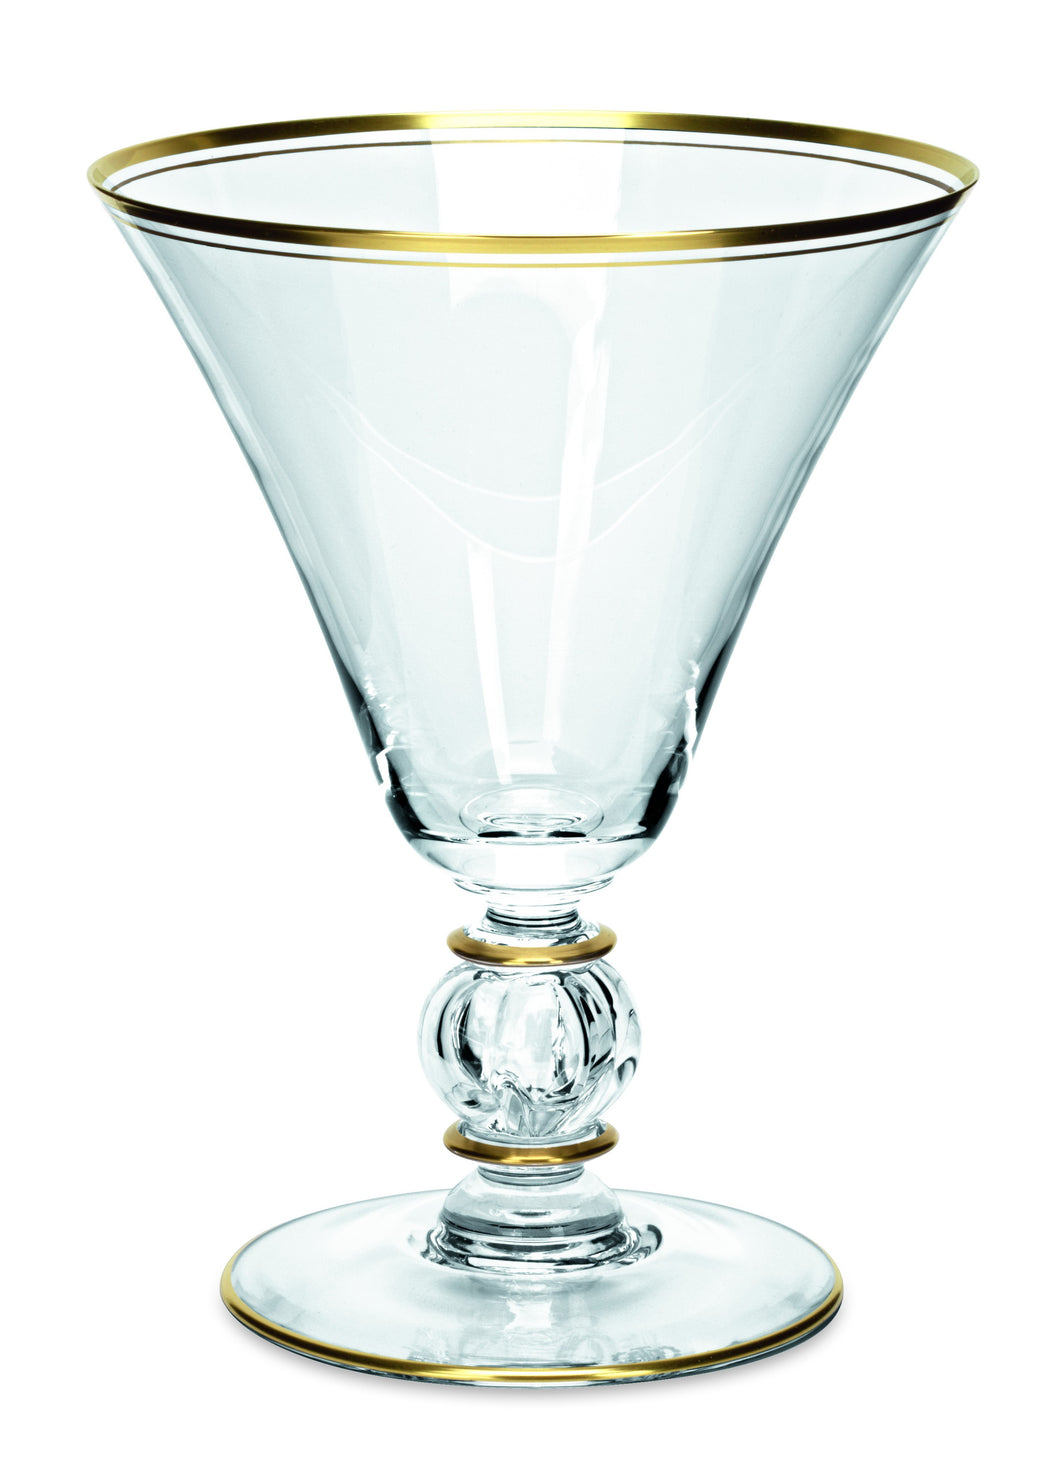 PETERSBURG klar, Goldrand - Weinglas 147 mm (Abverkauf)